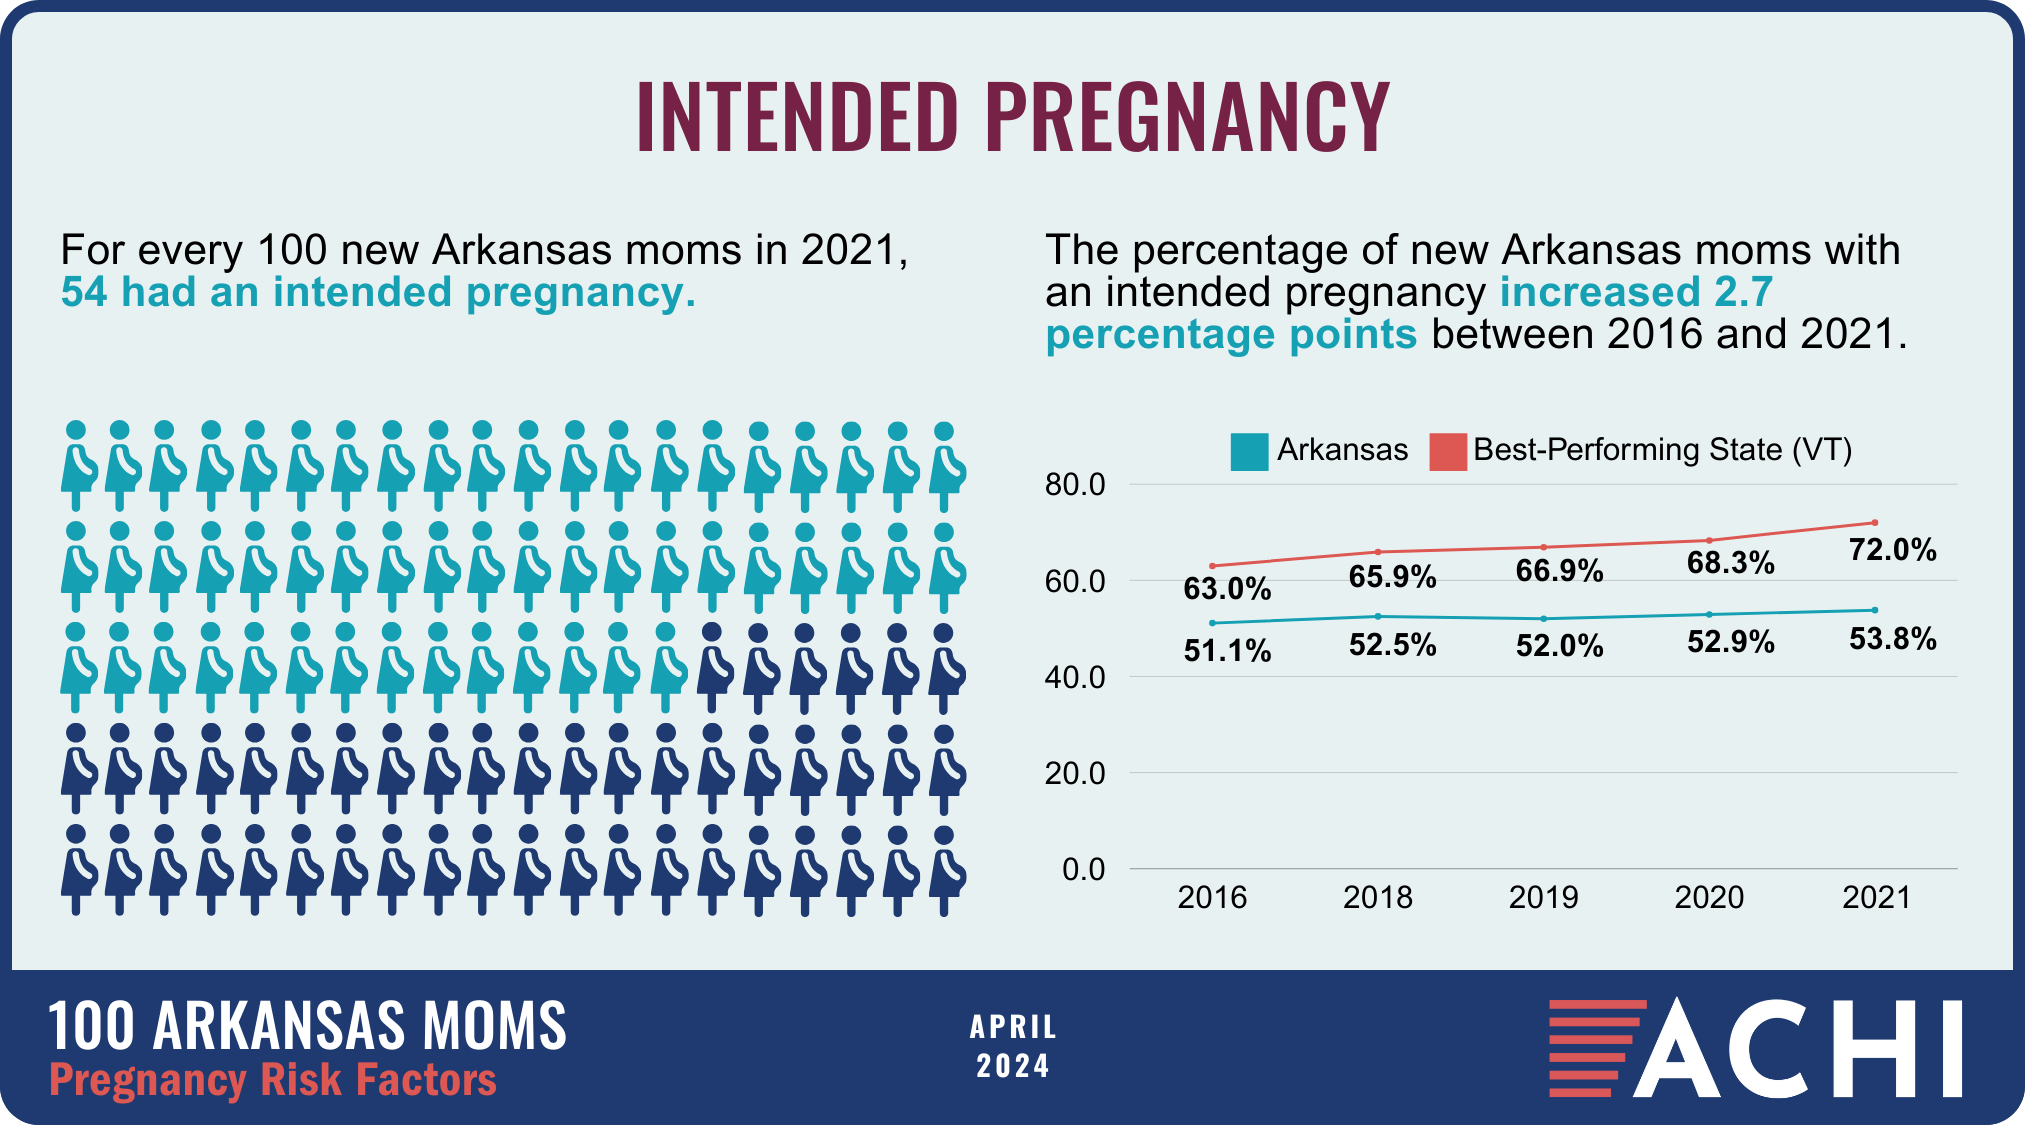 13_240404_100 Arkansas Moms_Pregnancy Risk Factors_Intended Pregnancy